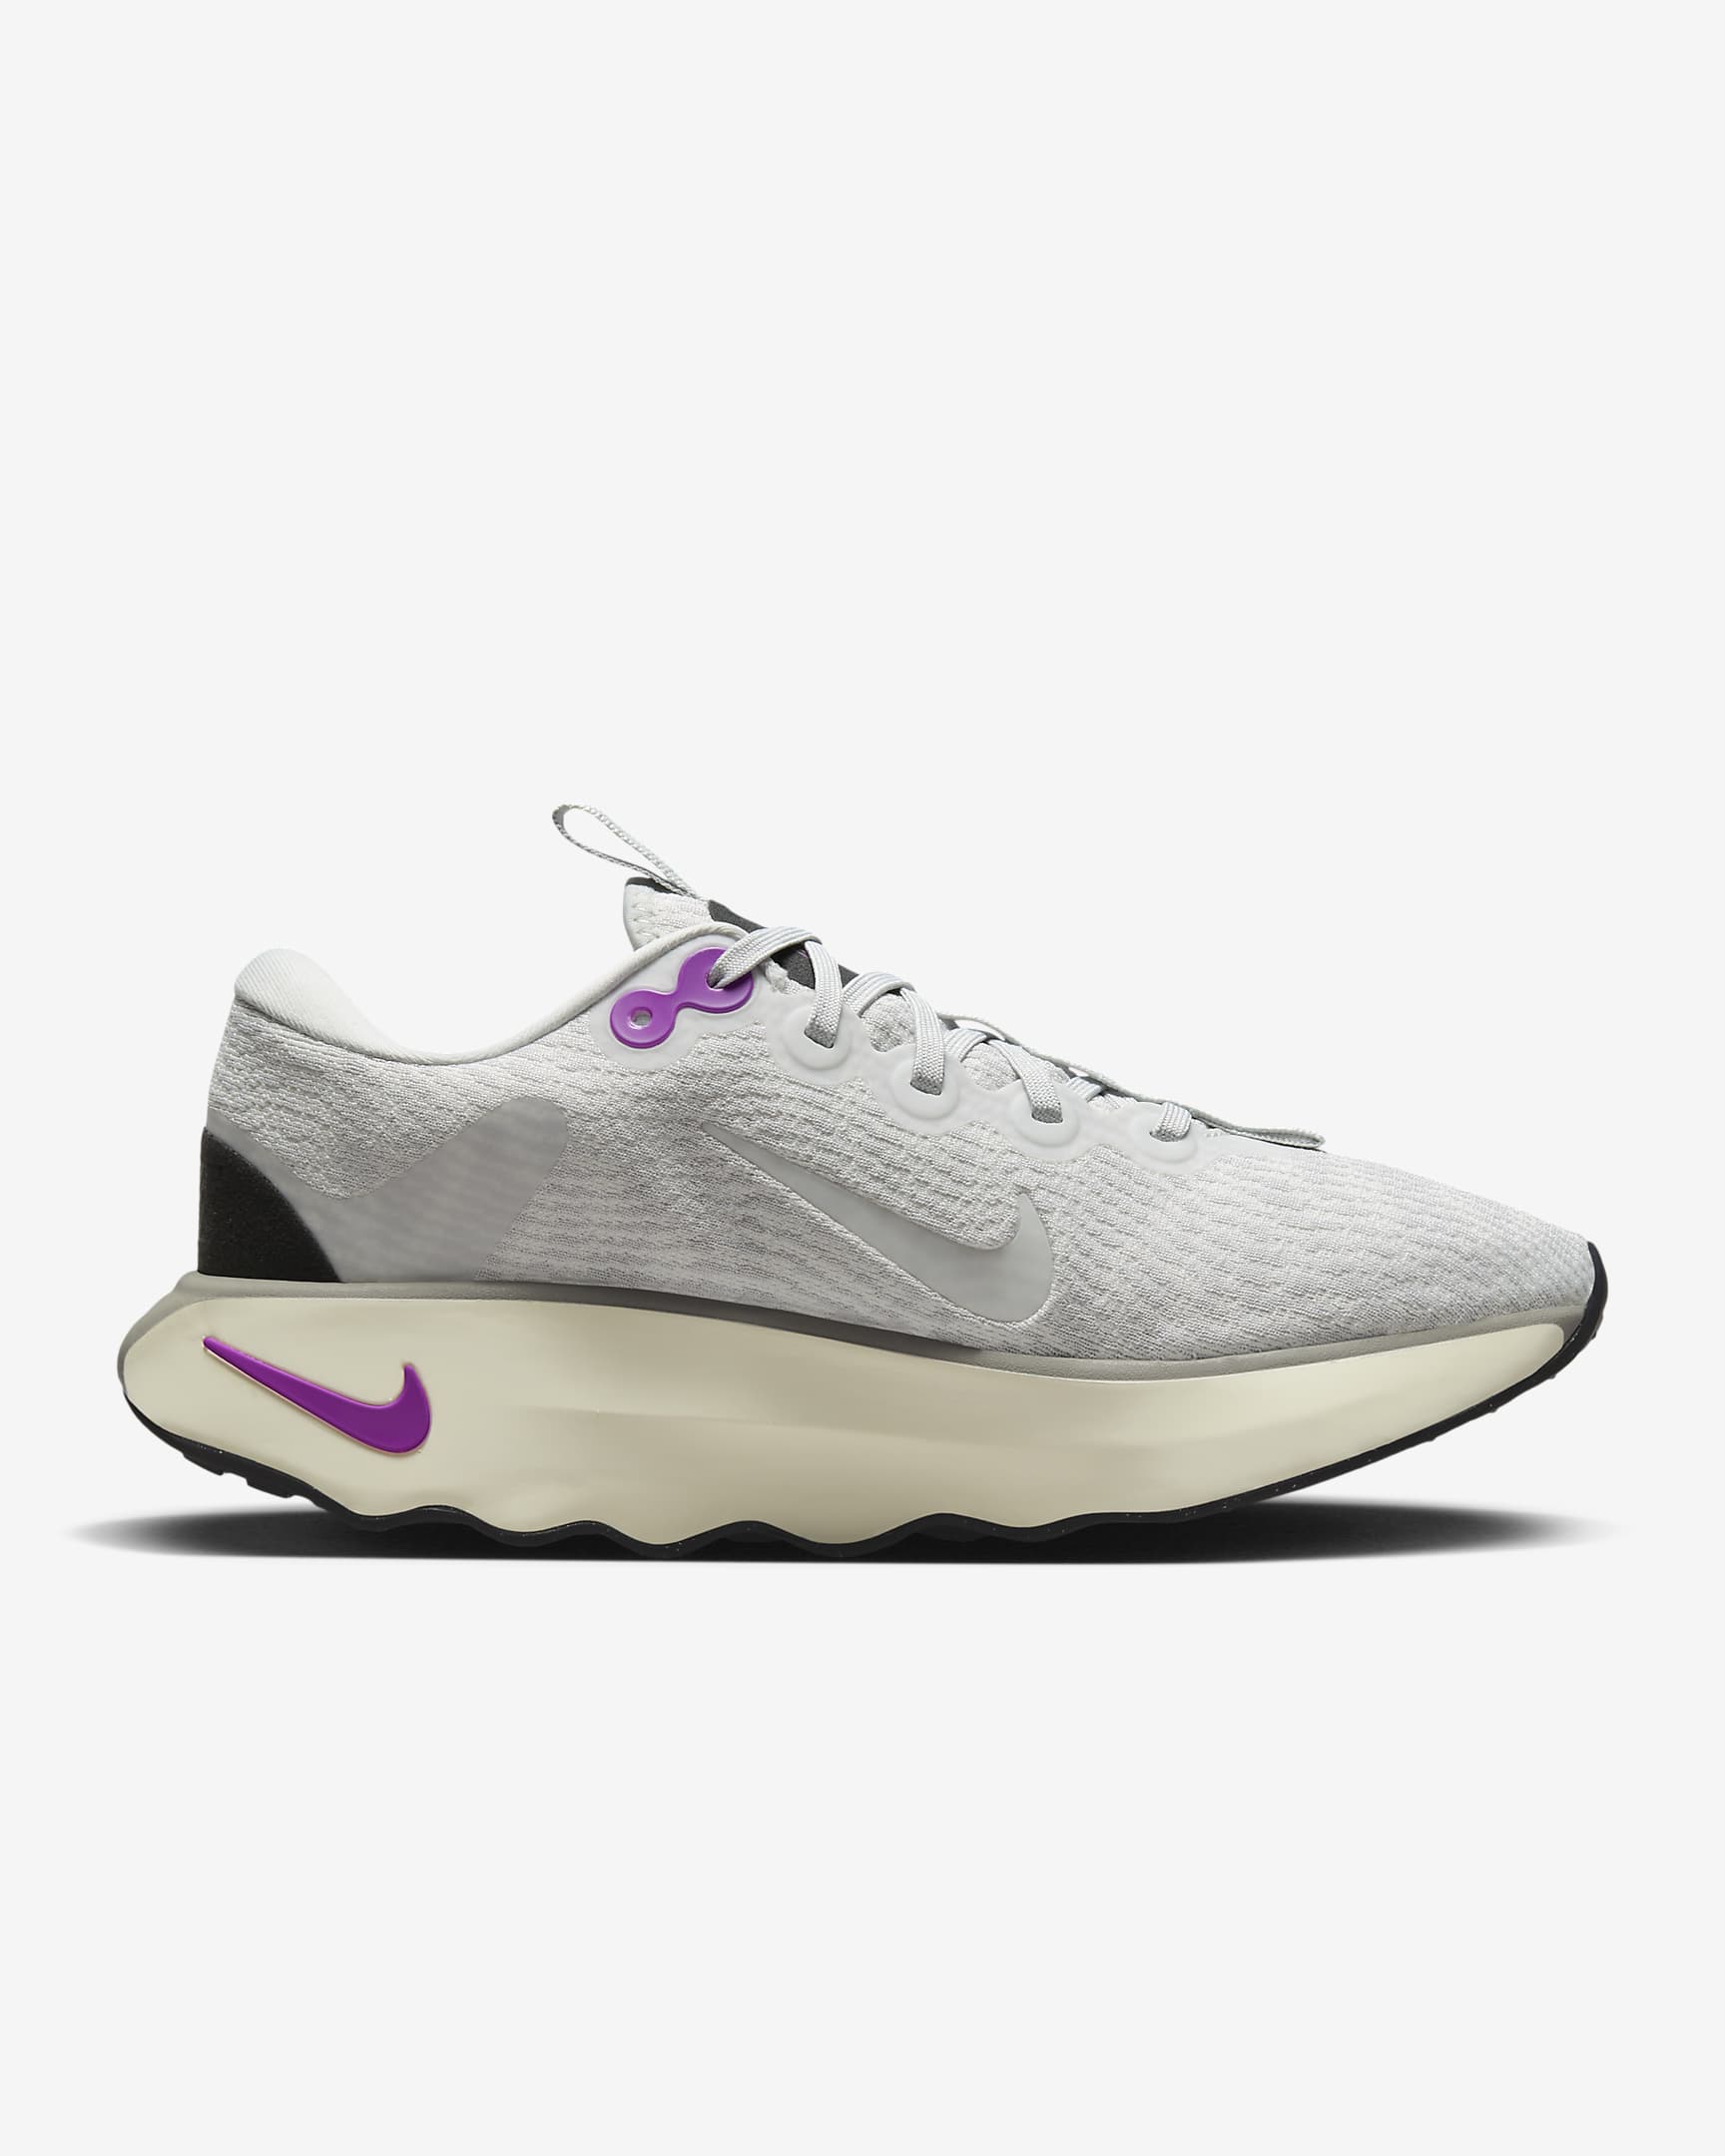 Nike Motiva Women's Walking Shoes - Photon Dust/Hyper Violet/Coconut Milk/Photon Dust